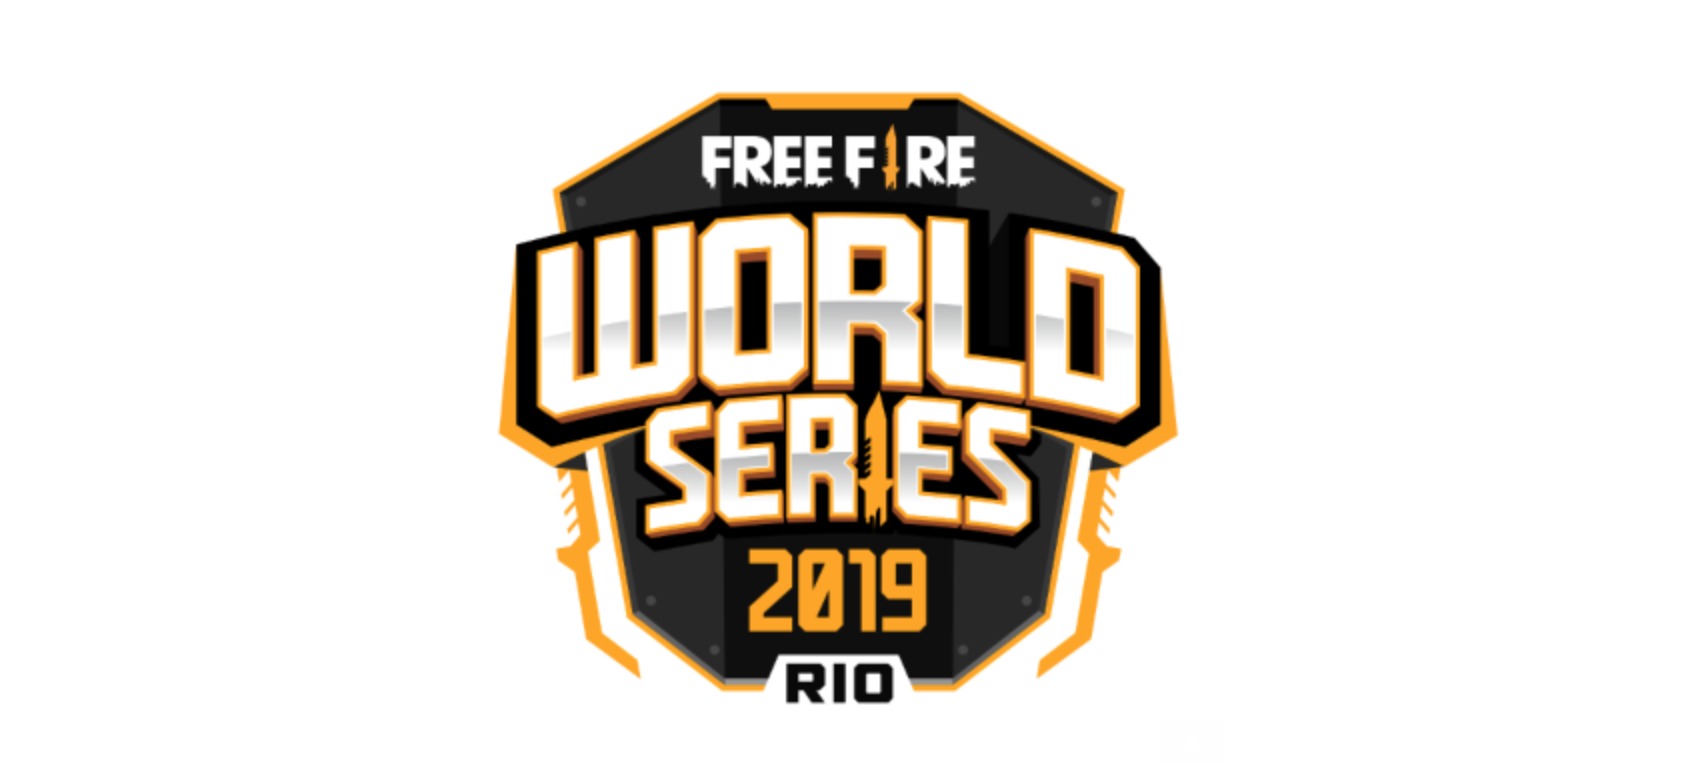 Vale Vale - Alok & Zafrir  Música Tema: Free Fire World Series